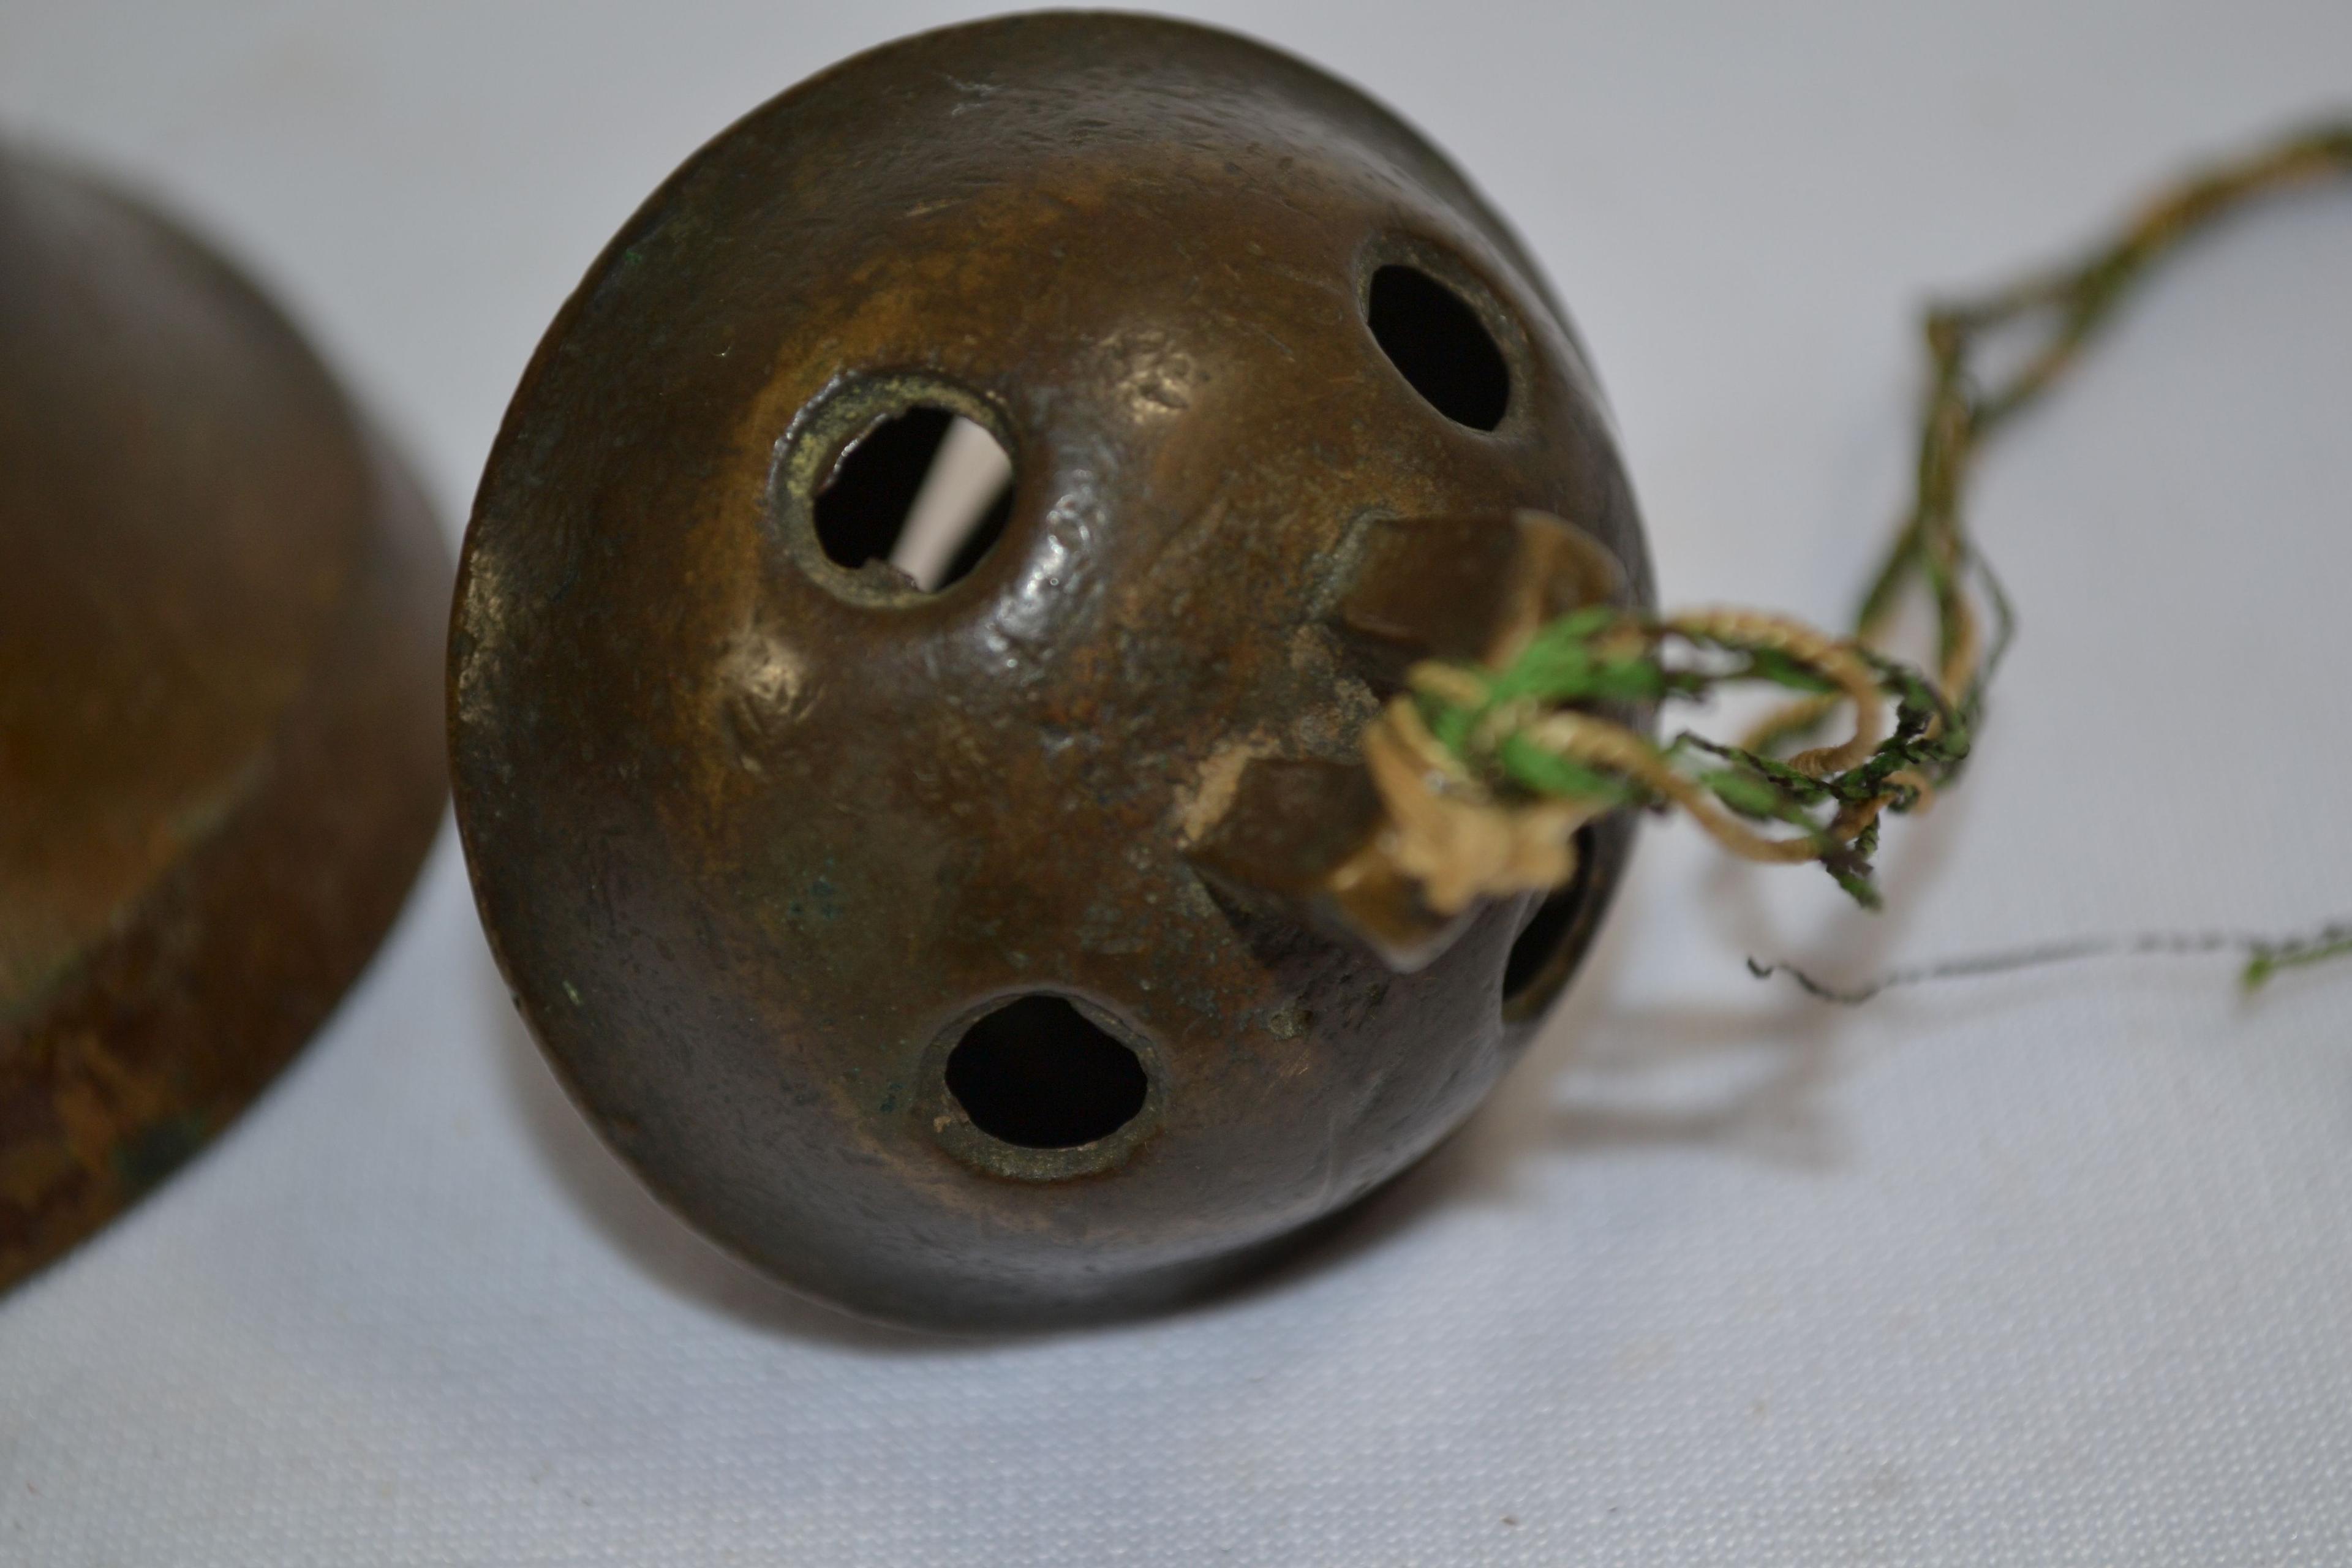 Vintage Brass School Bell (Has Crack) and Brass Sleigh Bell